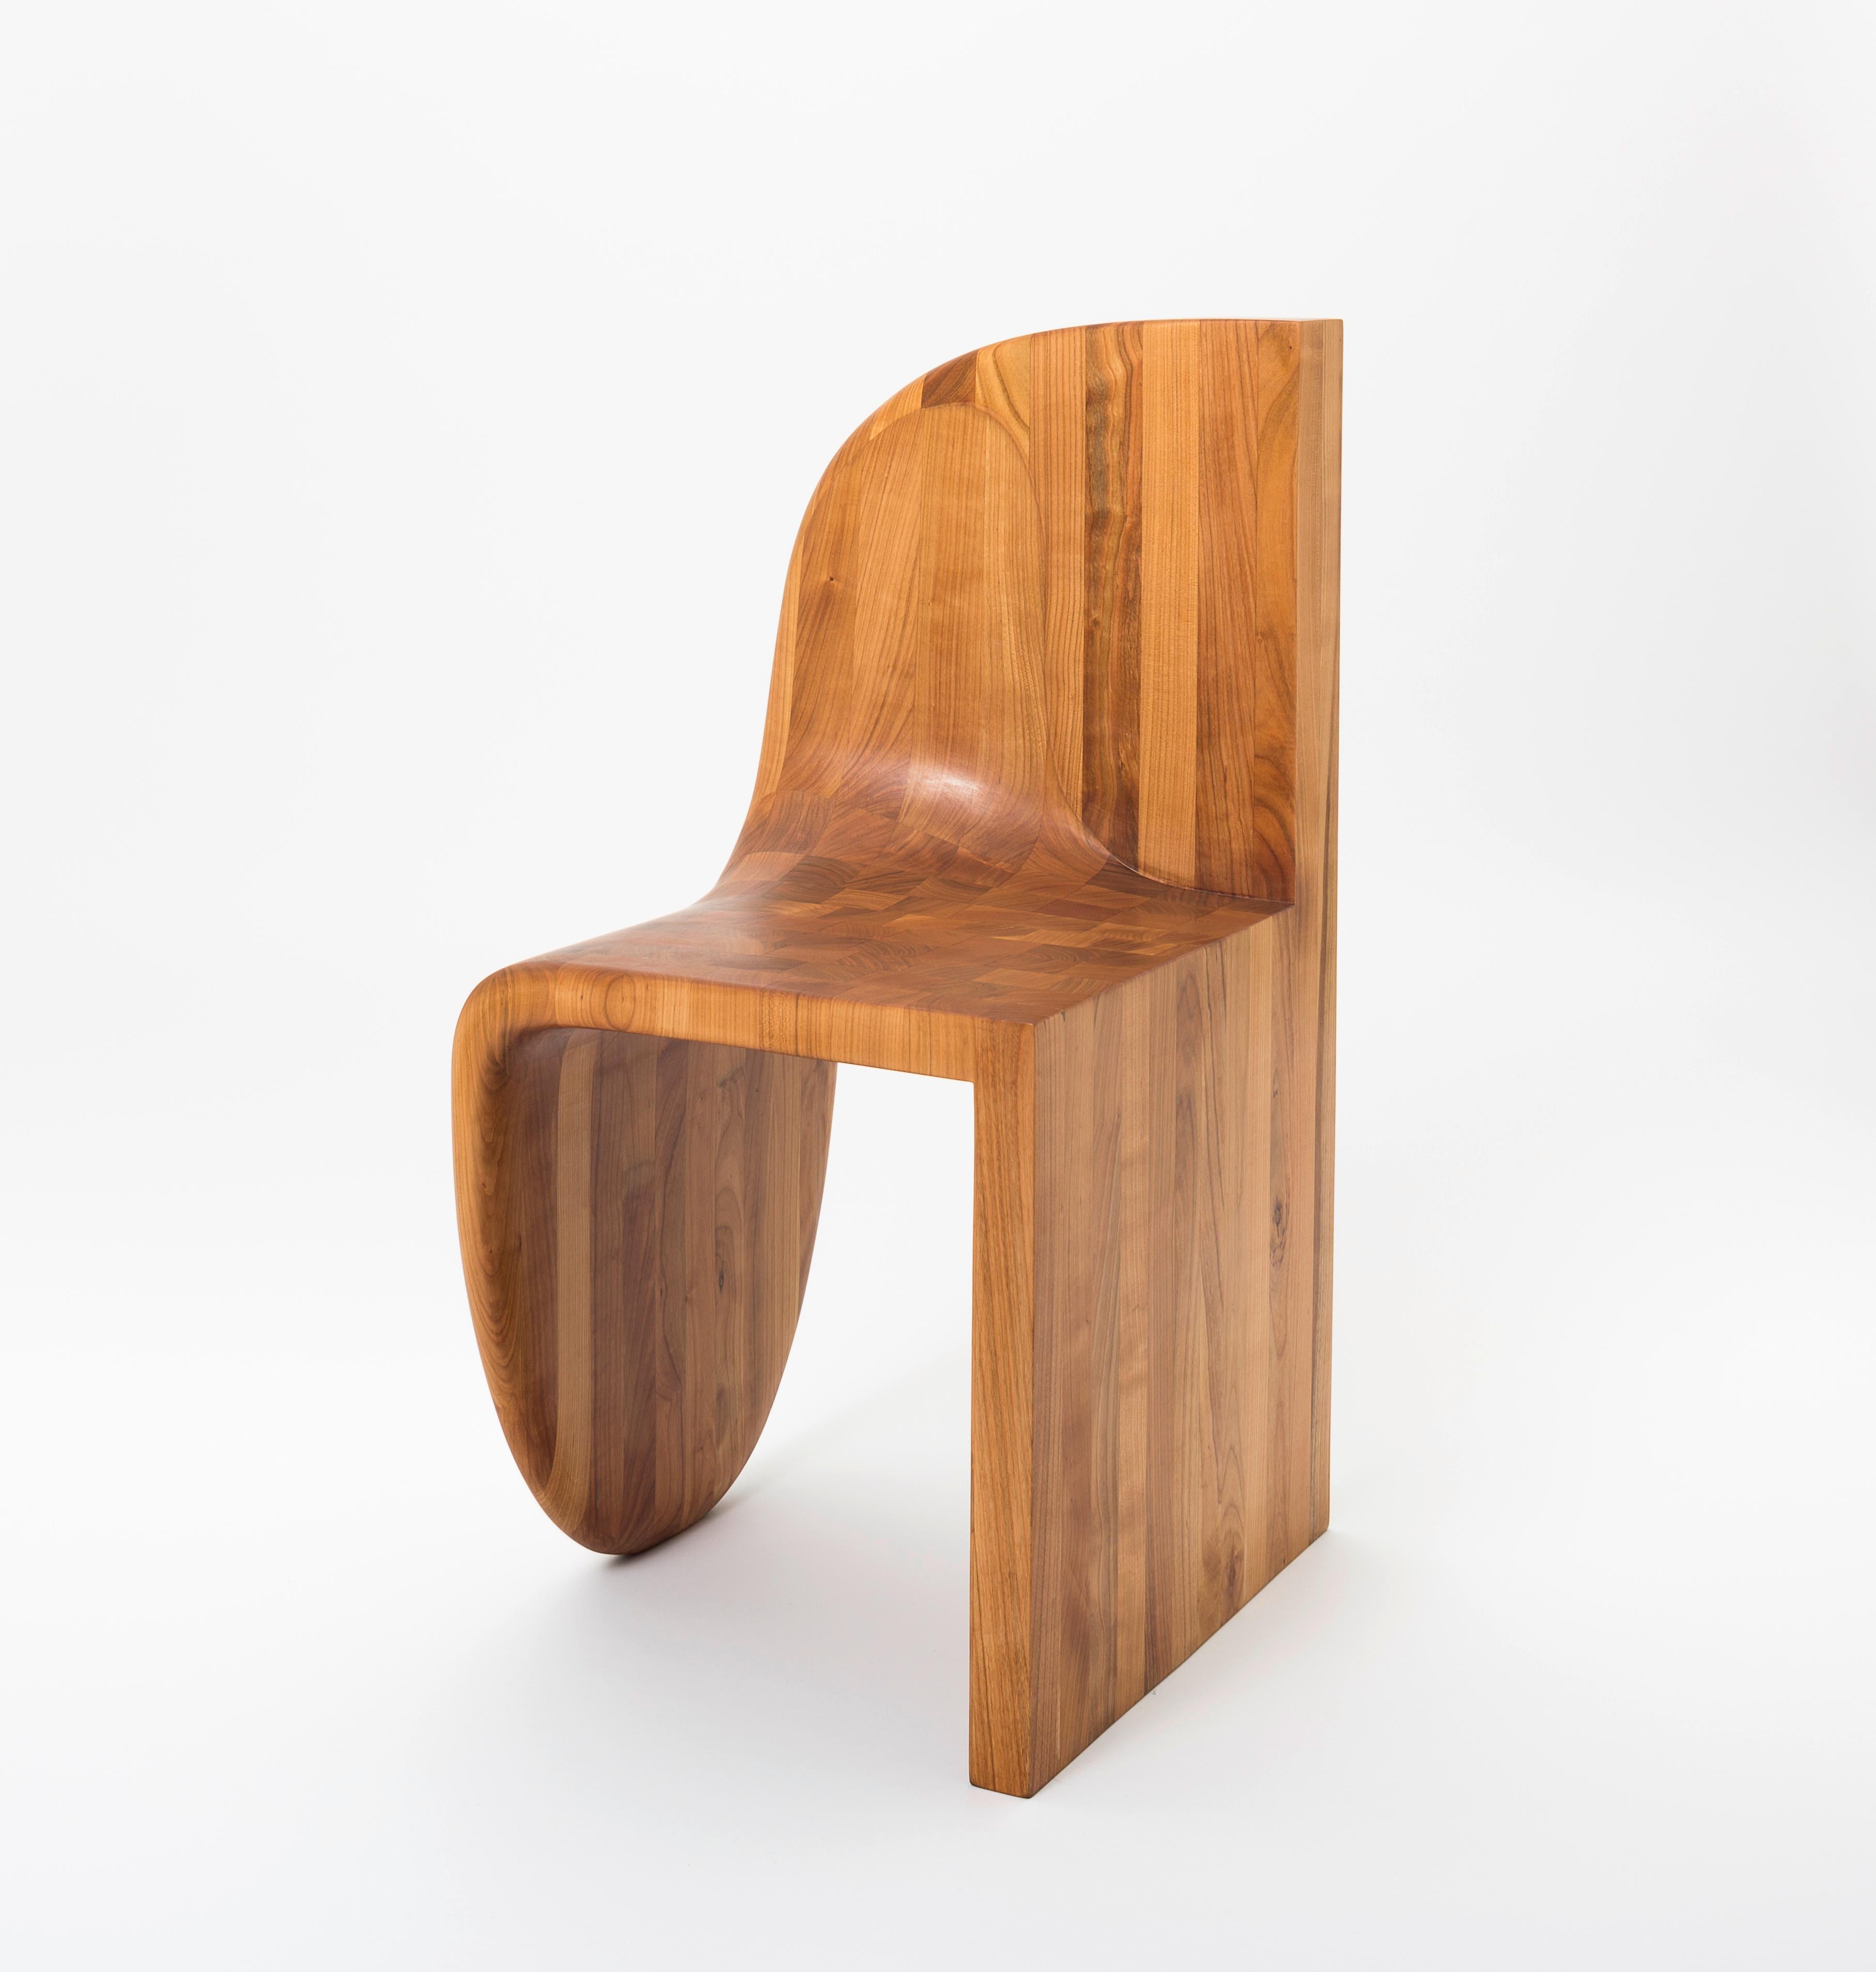 Contemporary Polymorph Chair by Philipp Aduatz